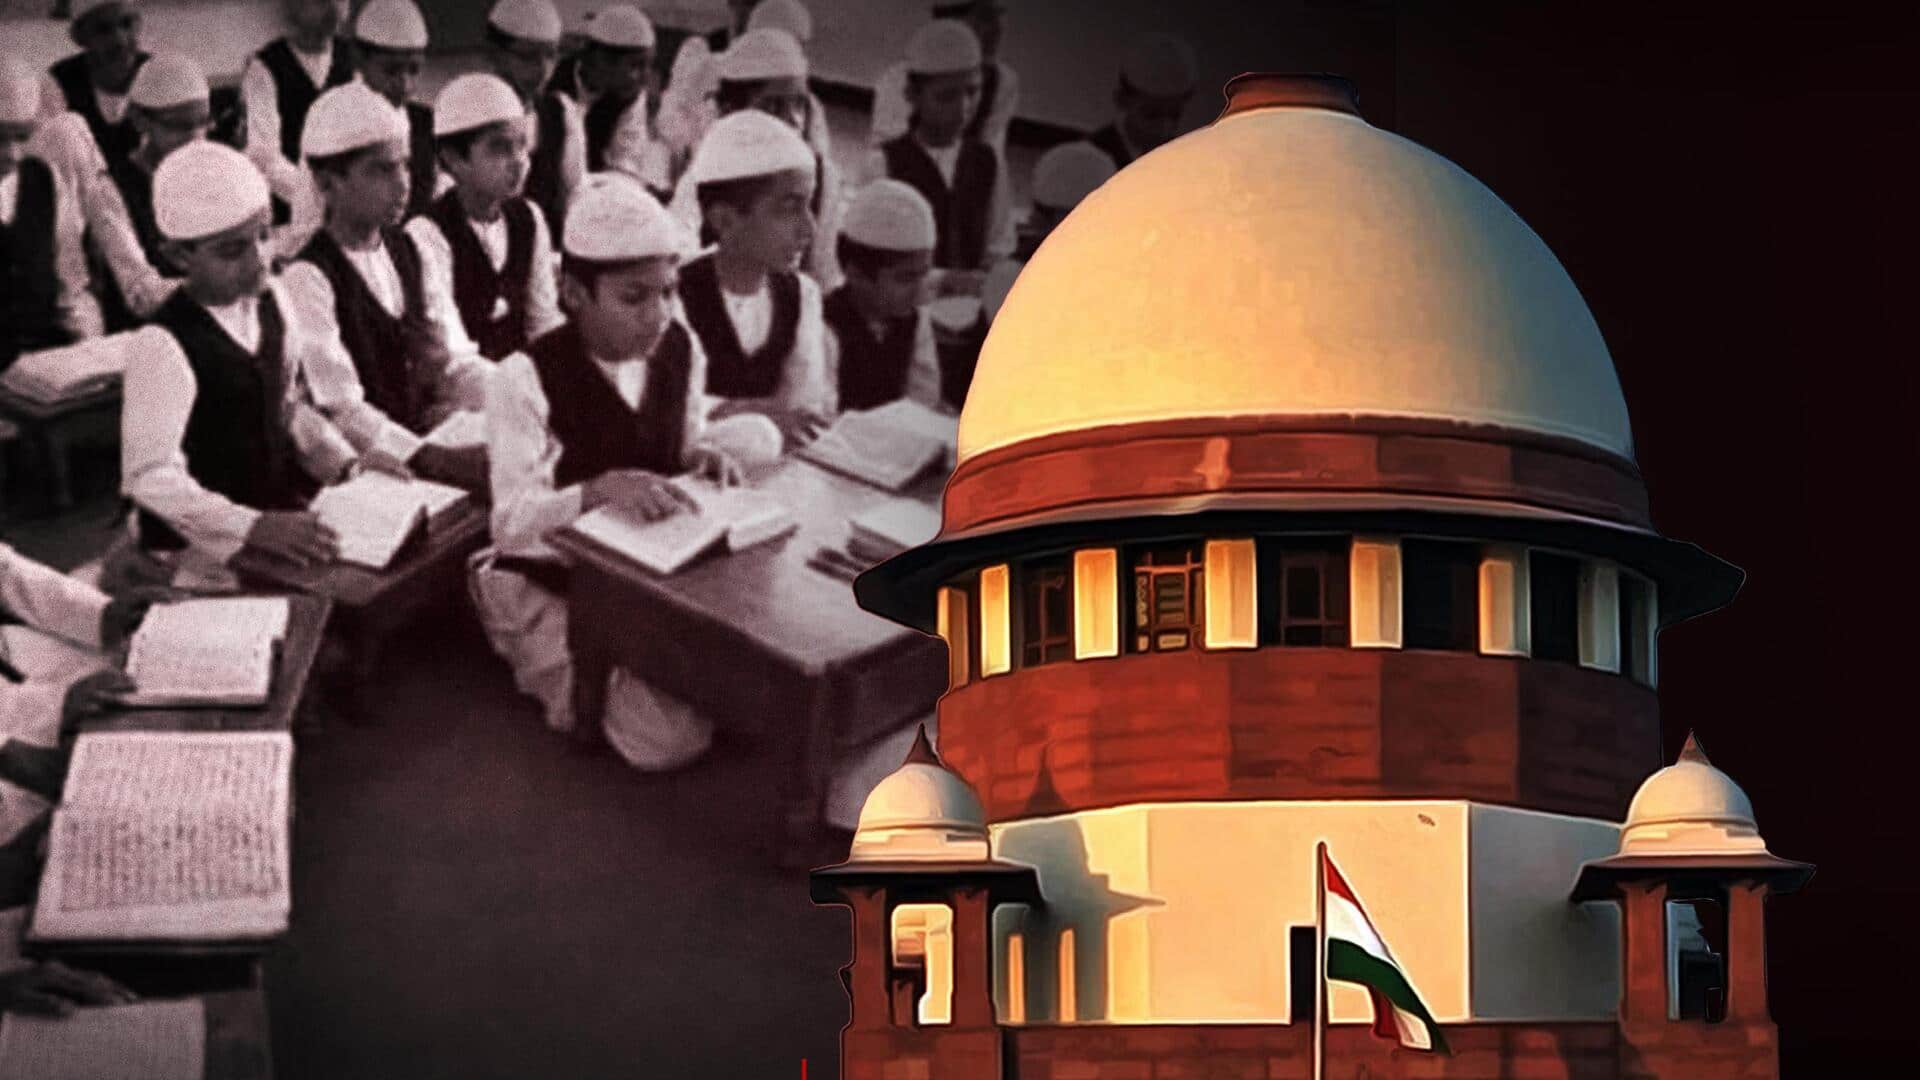 Supreme Court: యూపీ మదర్సా చట్టాన్ని రద్దు చేస్తూ హైకోర్టు ఉత్తర్వులపై సుప్రీంకోర్టు స్టే 